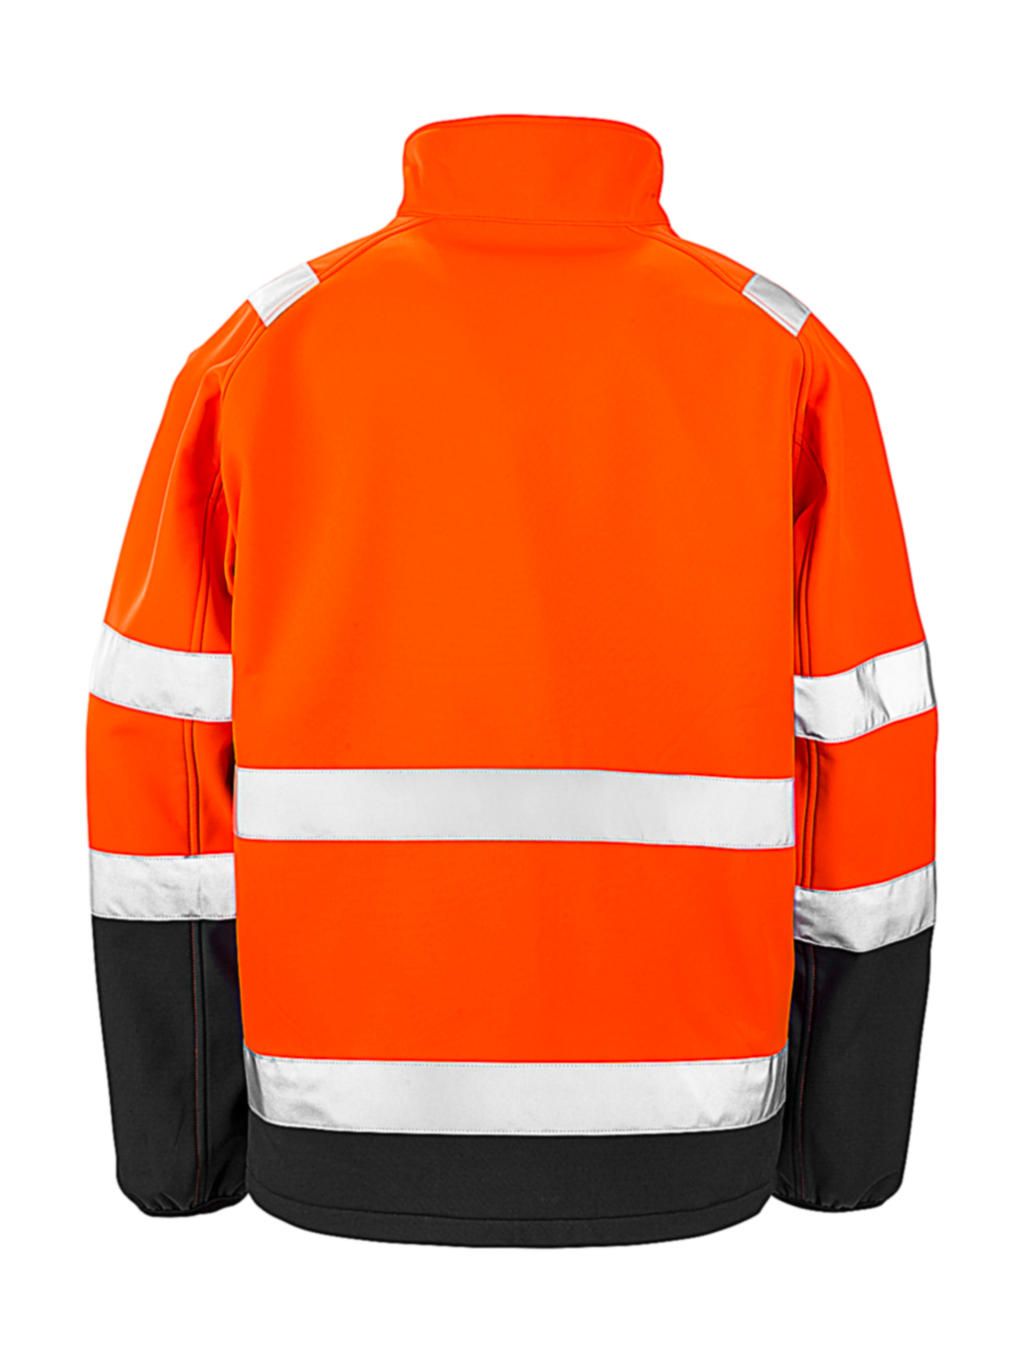  Printable Safety Softshell in Farbe Fluorescent Orange/Black